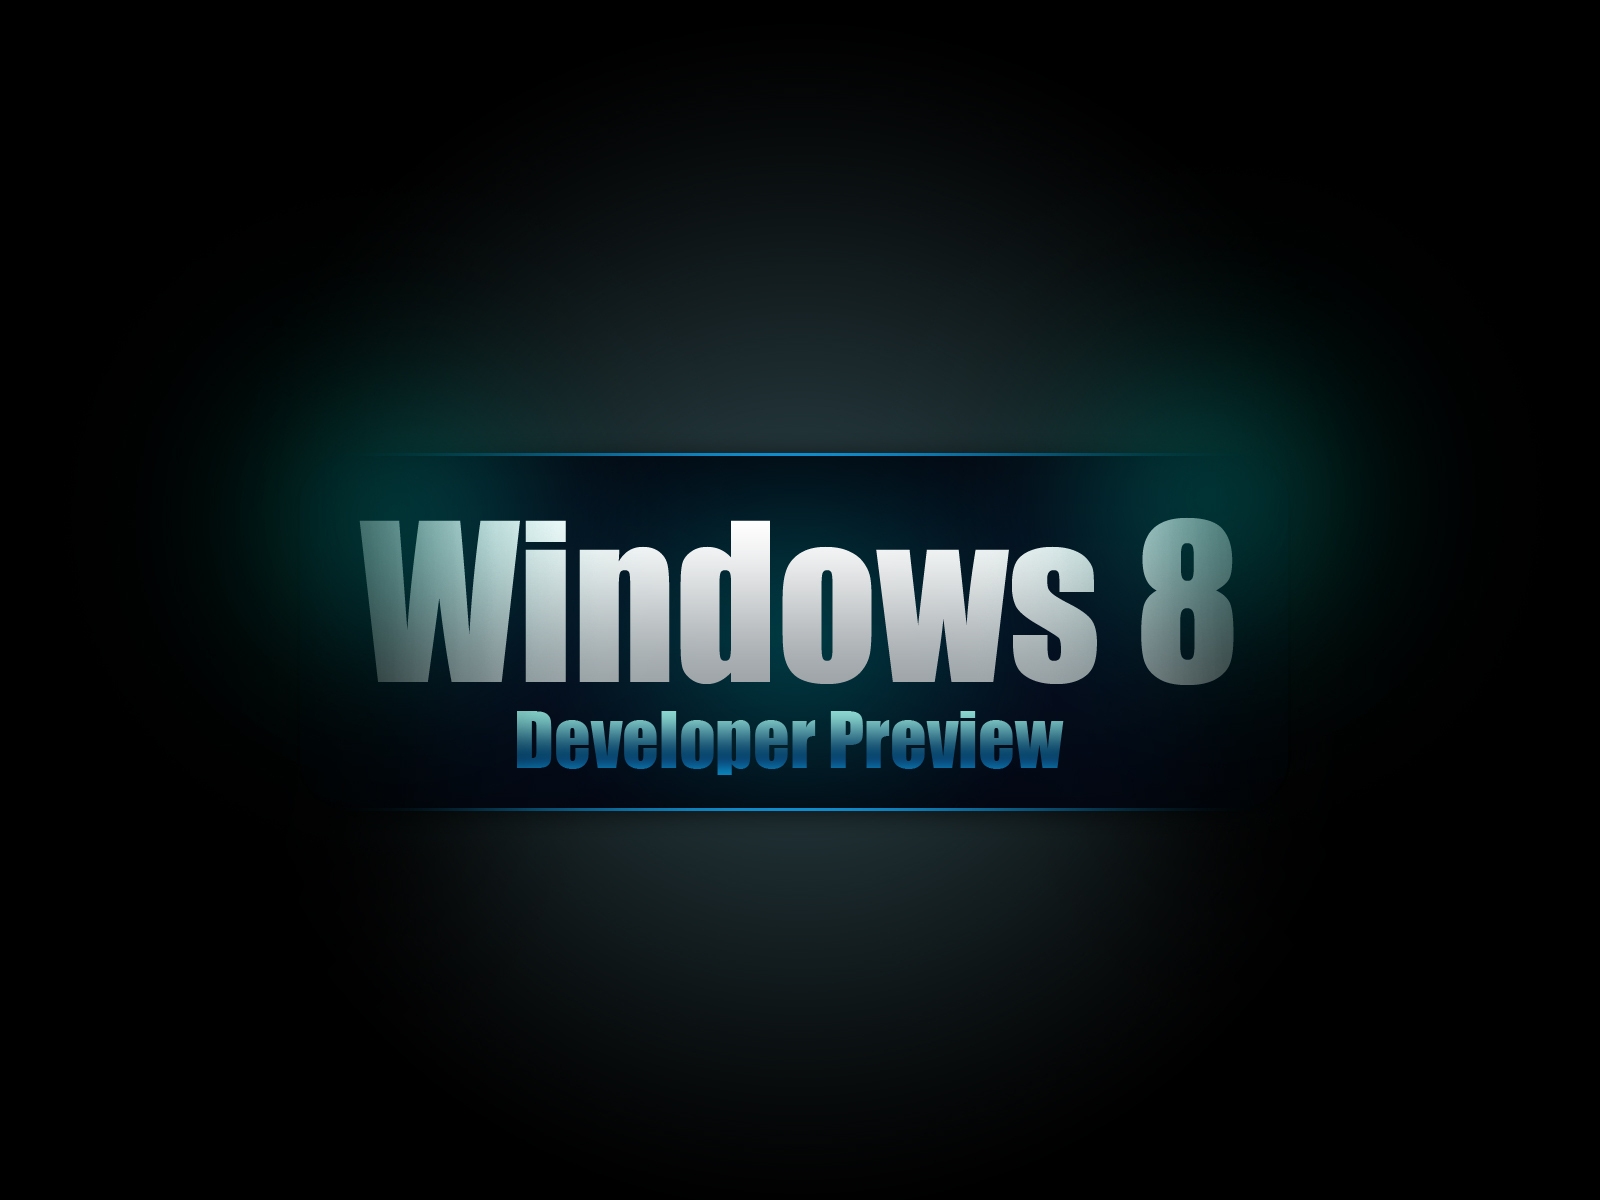 Windows 8 Developer for 1600 x 1200 resolution